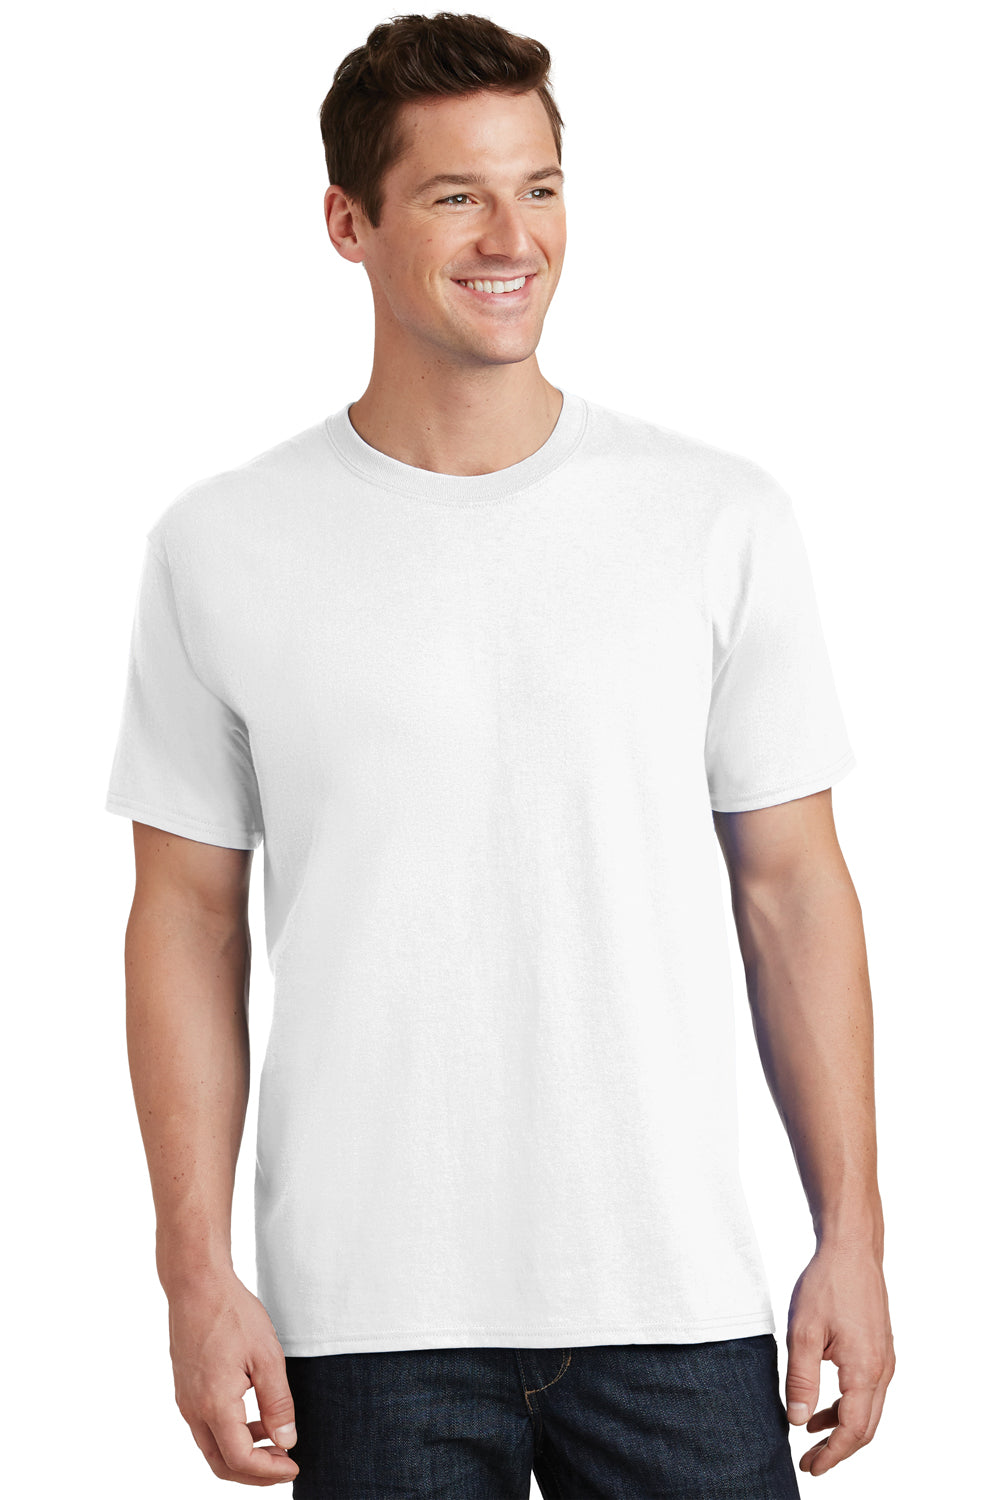 Port & Company PC54 Mens Core Short Sleeve Crewneck T-Shirt White Front